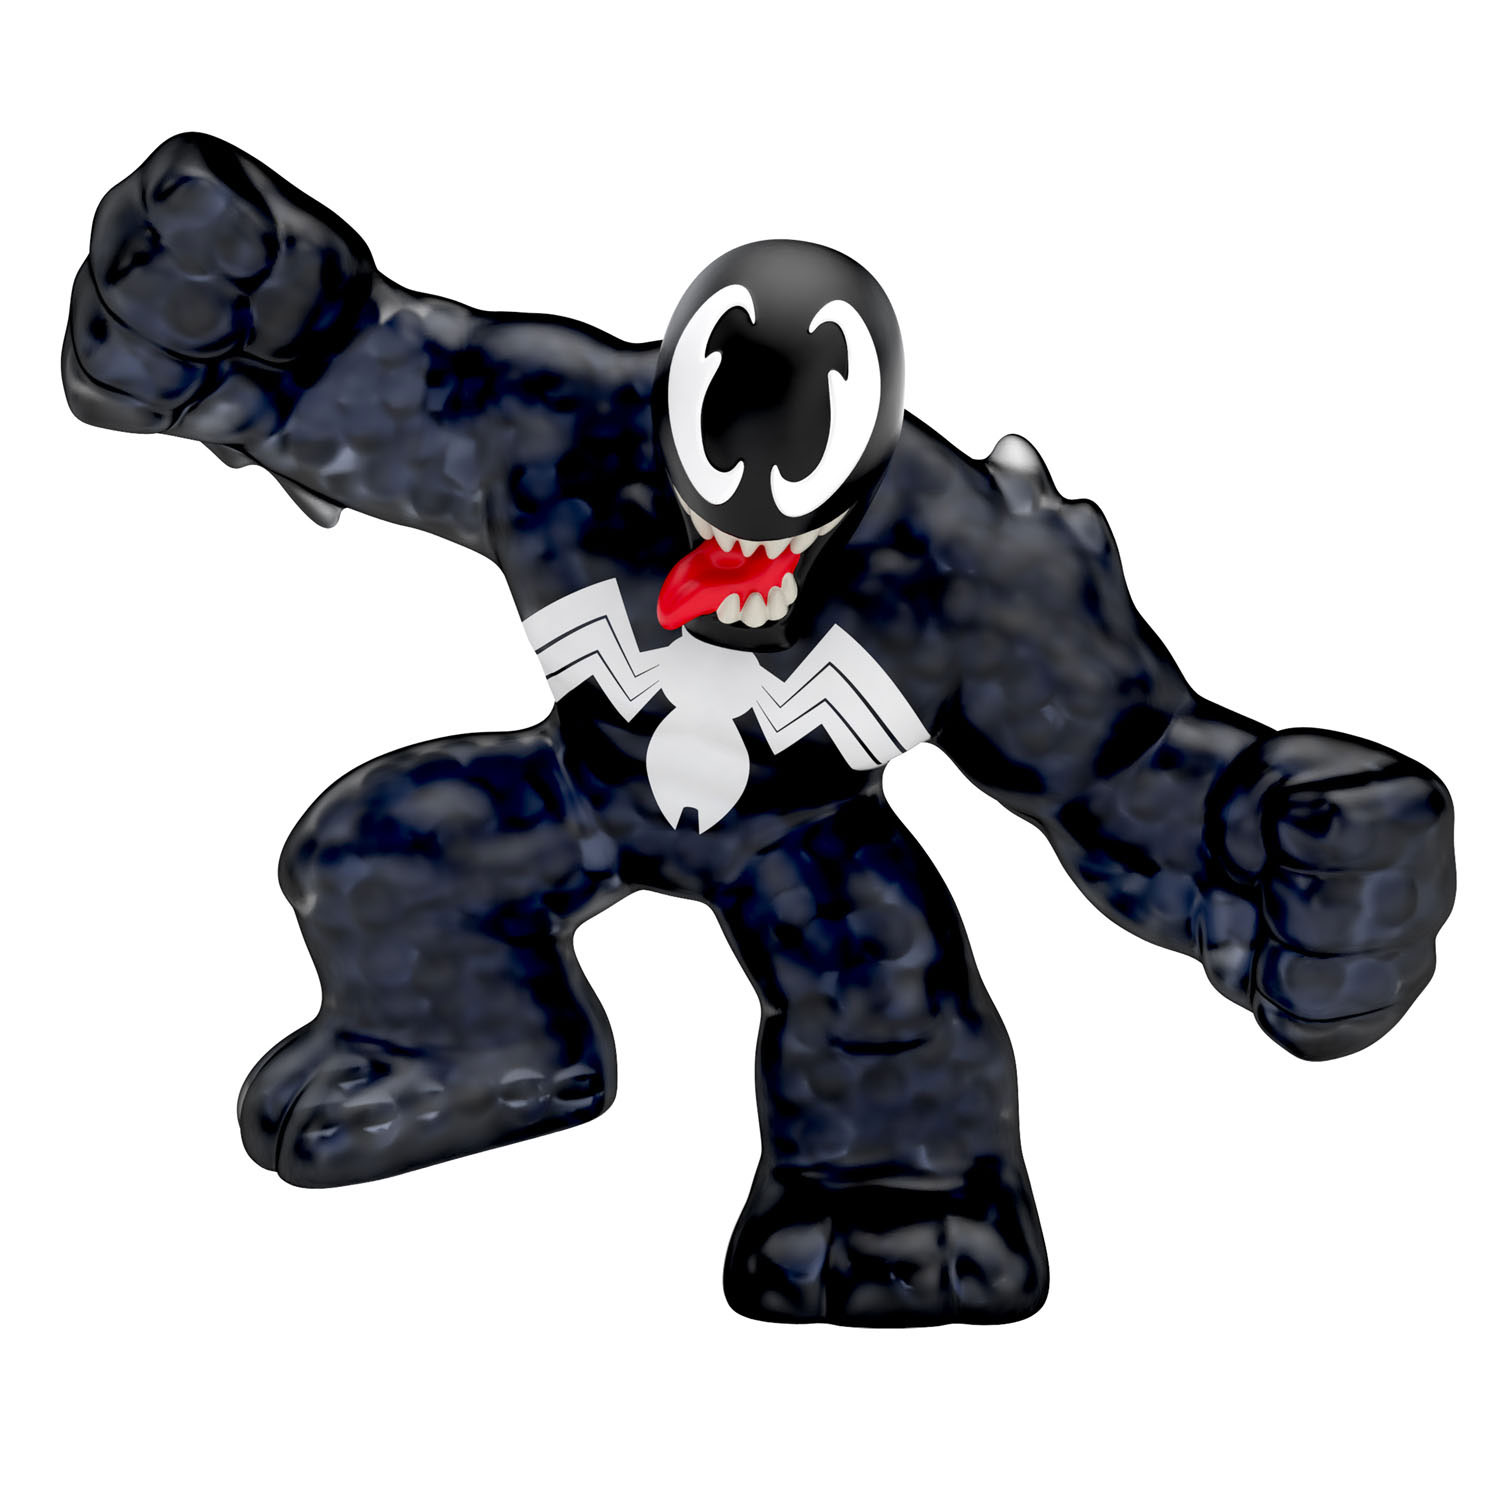 Goo Jit Zu Marvel Superheld - Venom